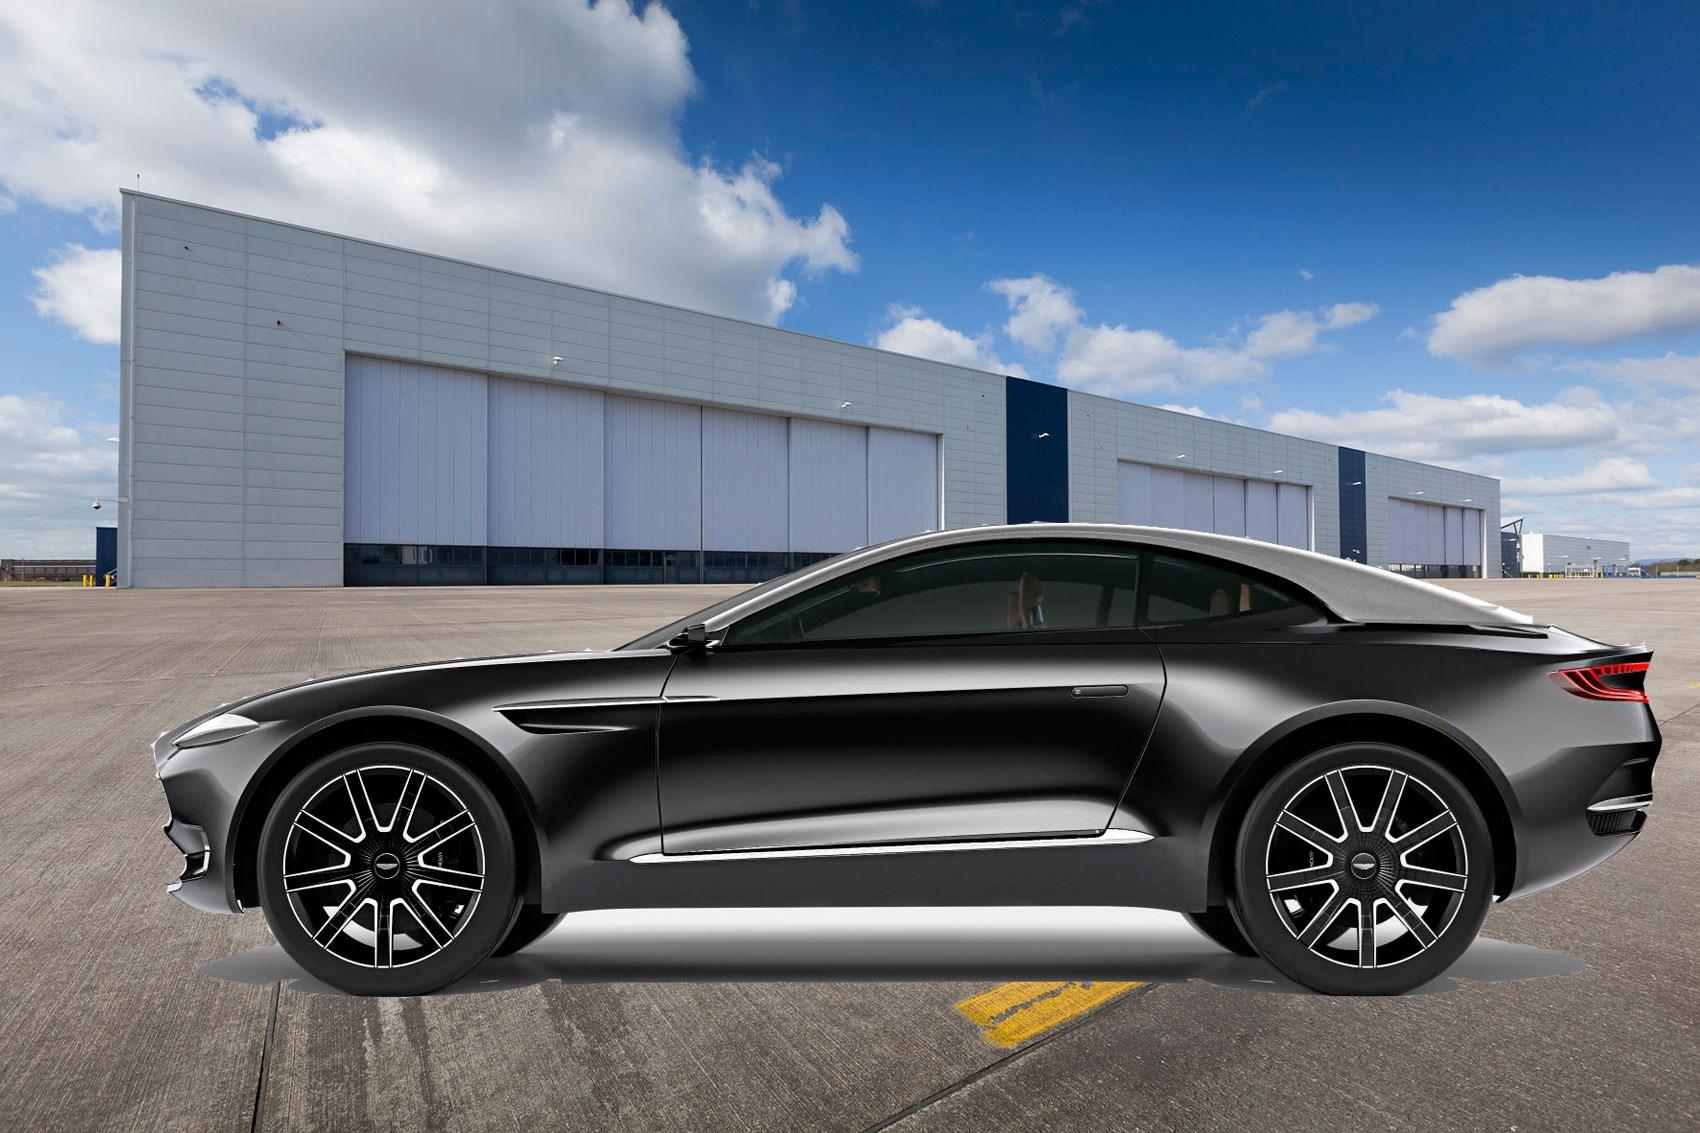 New 2020 Aston Martin Dbx Photo. Review Cars 2019